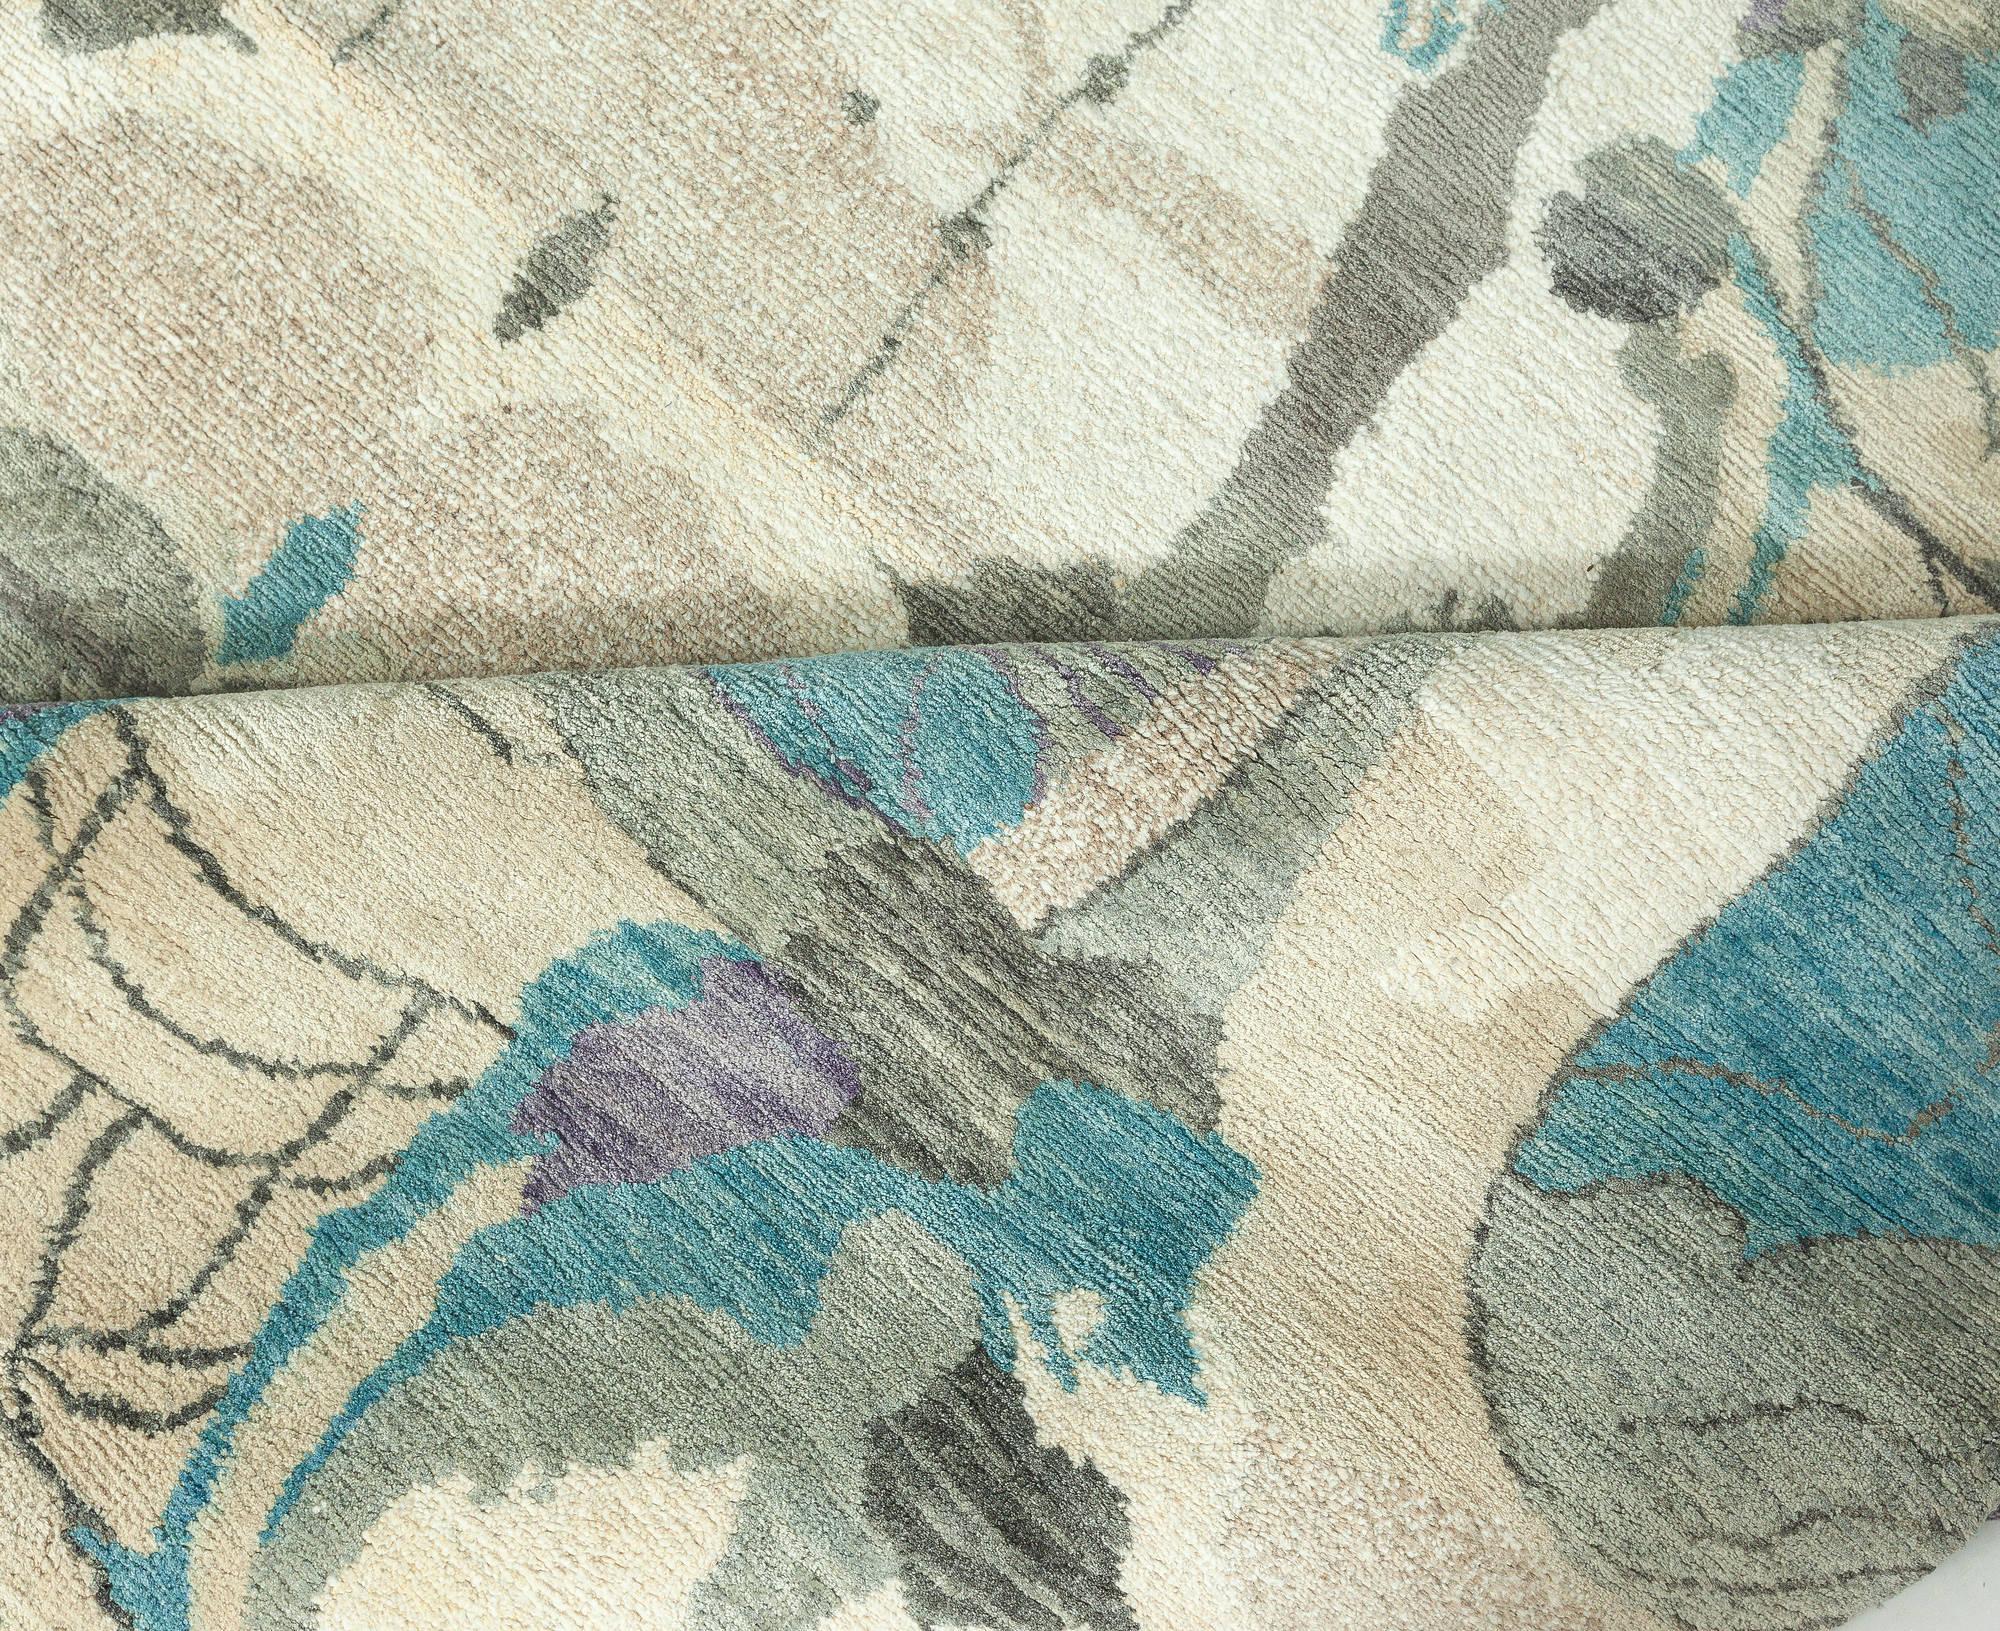 Eskayel Dynasty Modern handmade wool rug for Doris Leslie Blau.
Size: 10'0